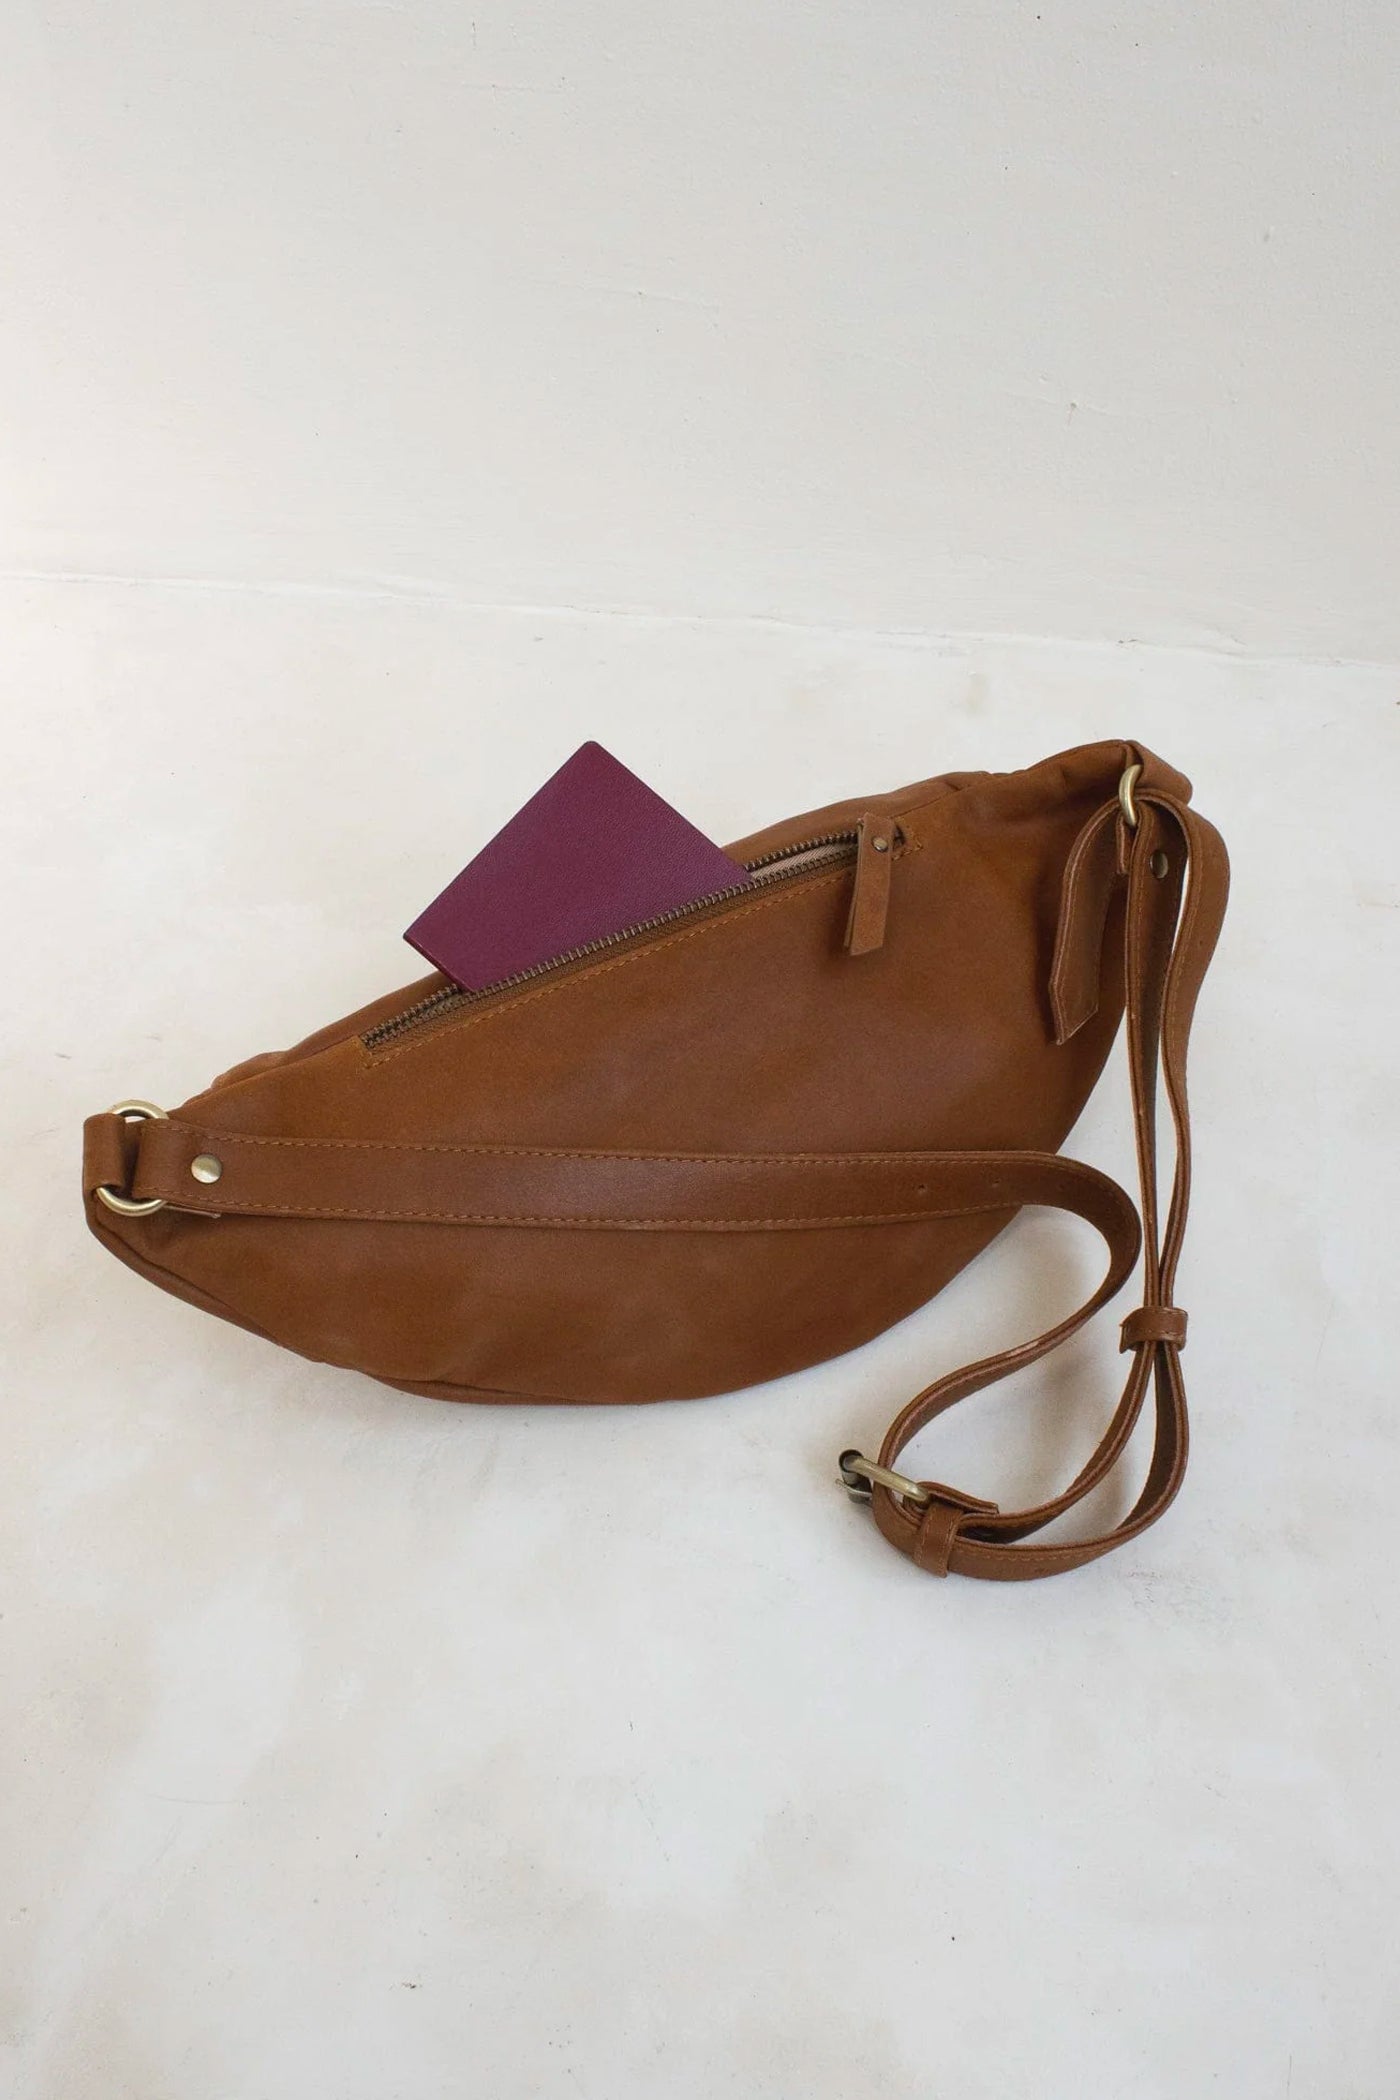 MANDRN Atlas Leather Bag